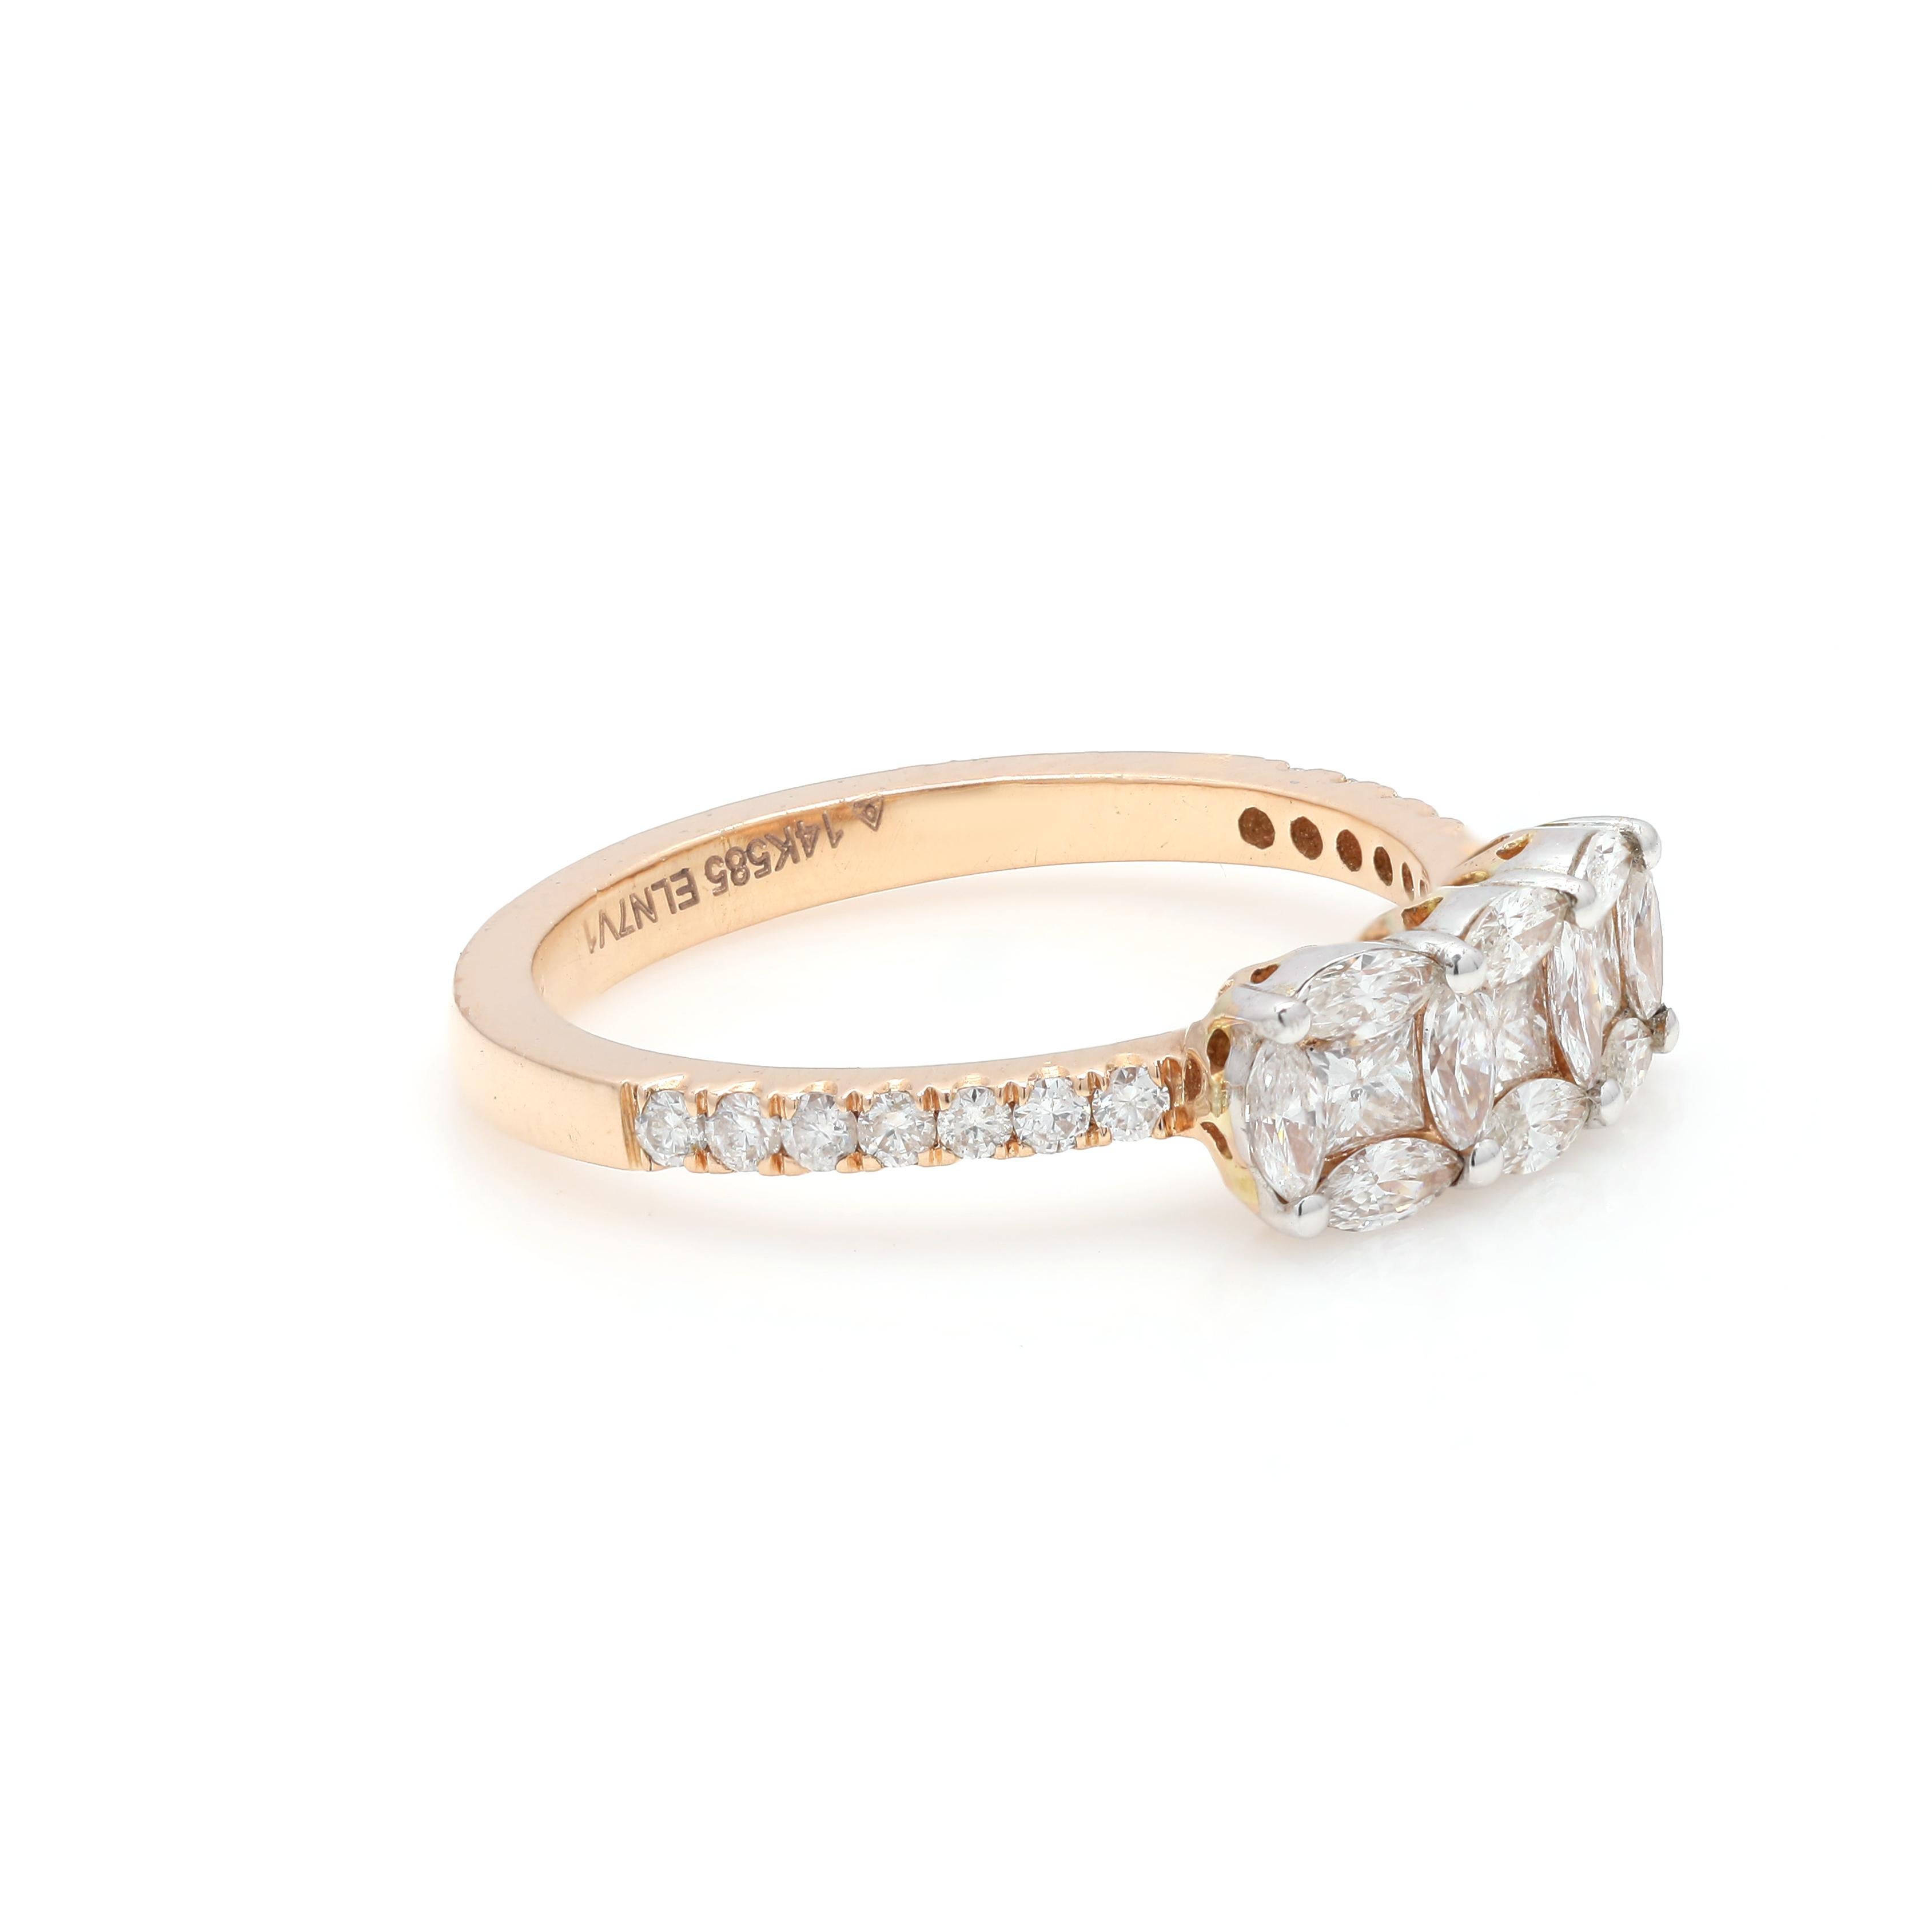 For Sale:  14k Yellow Gold Bespoke 0.78 Carat Brilliant Diamond Engagement Ring 4